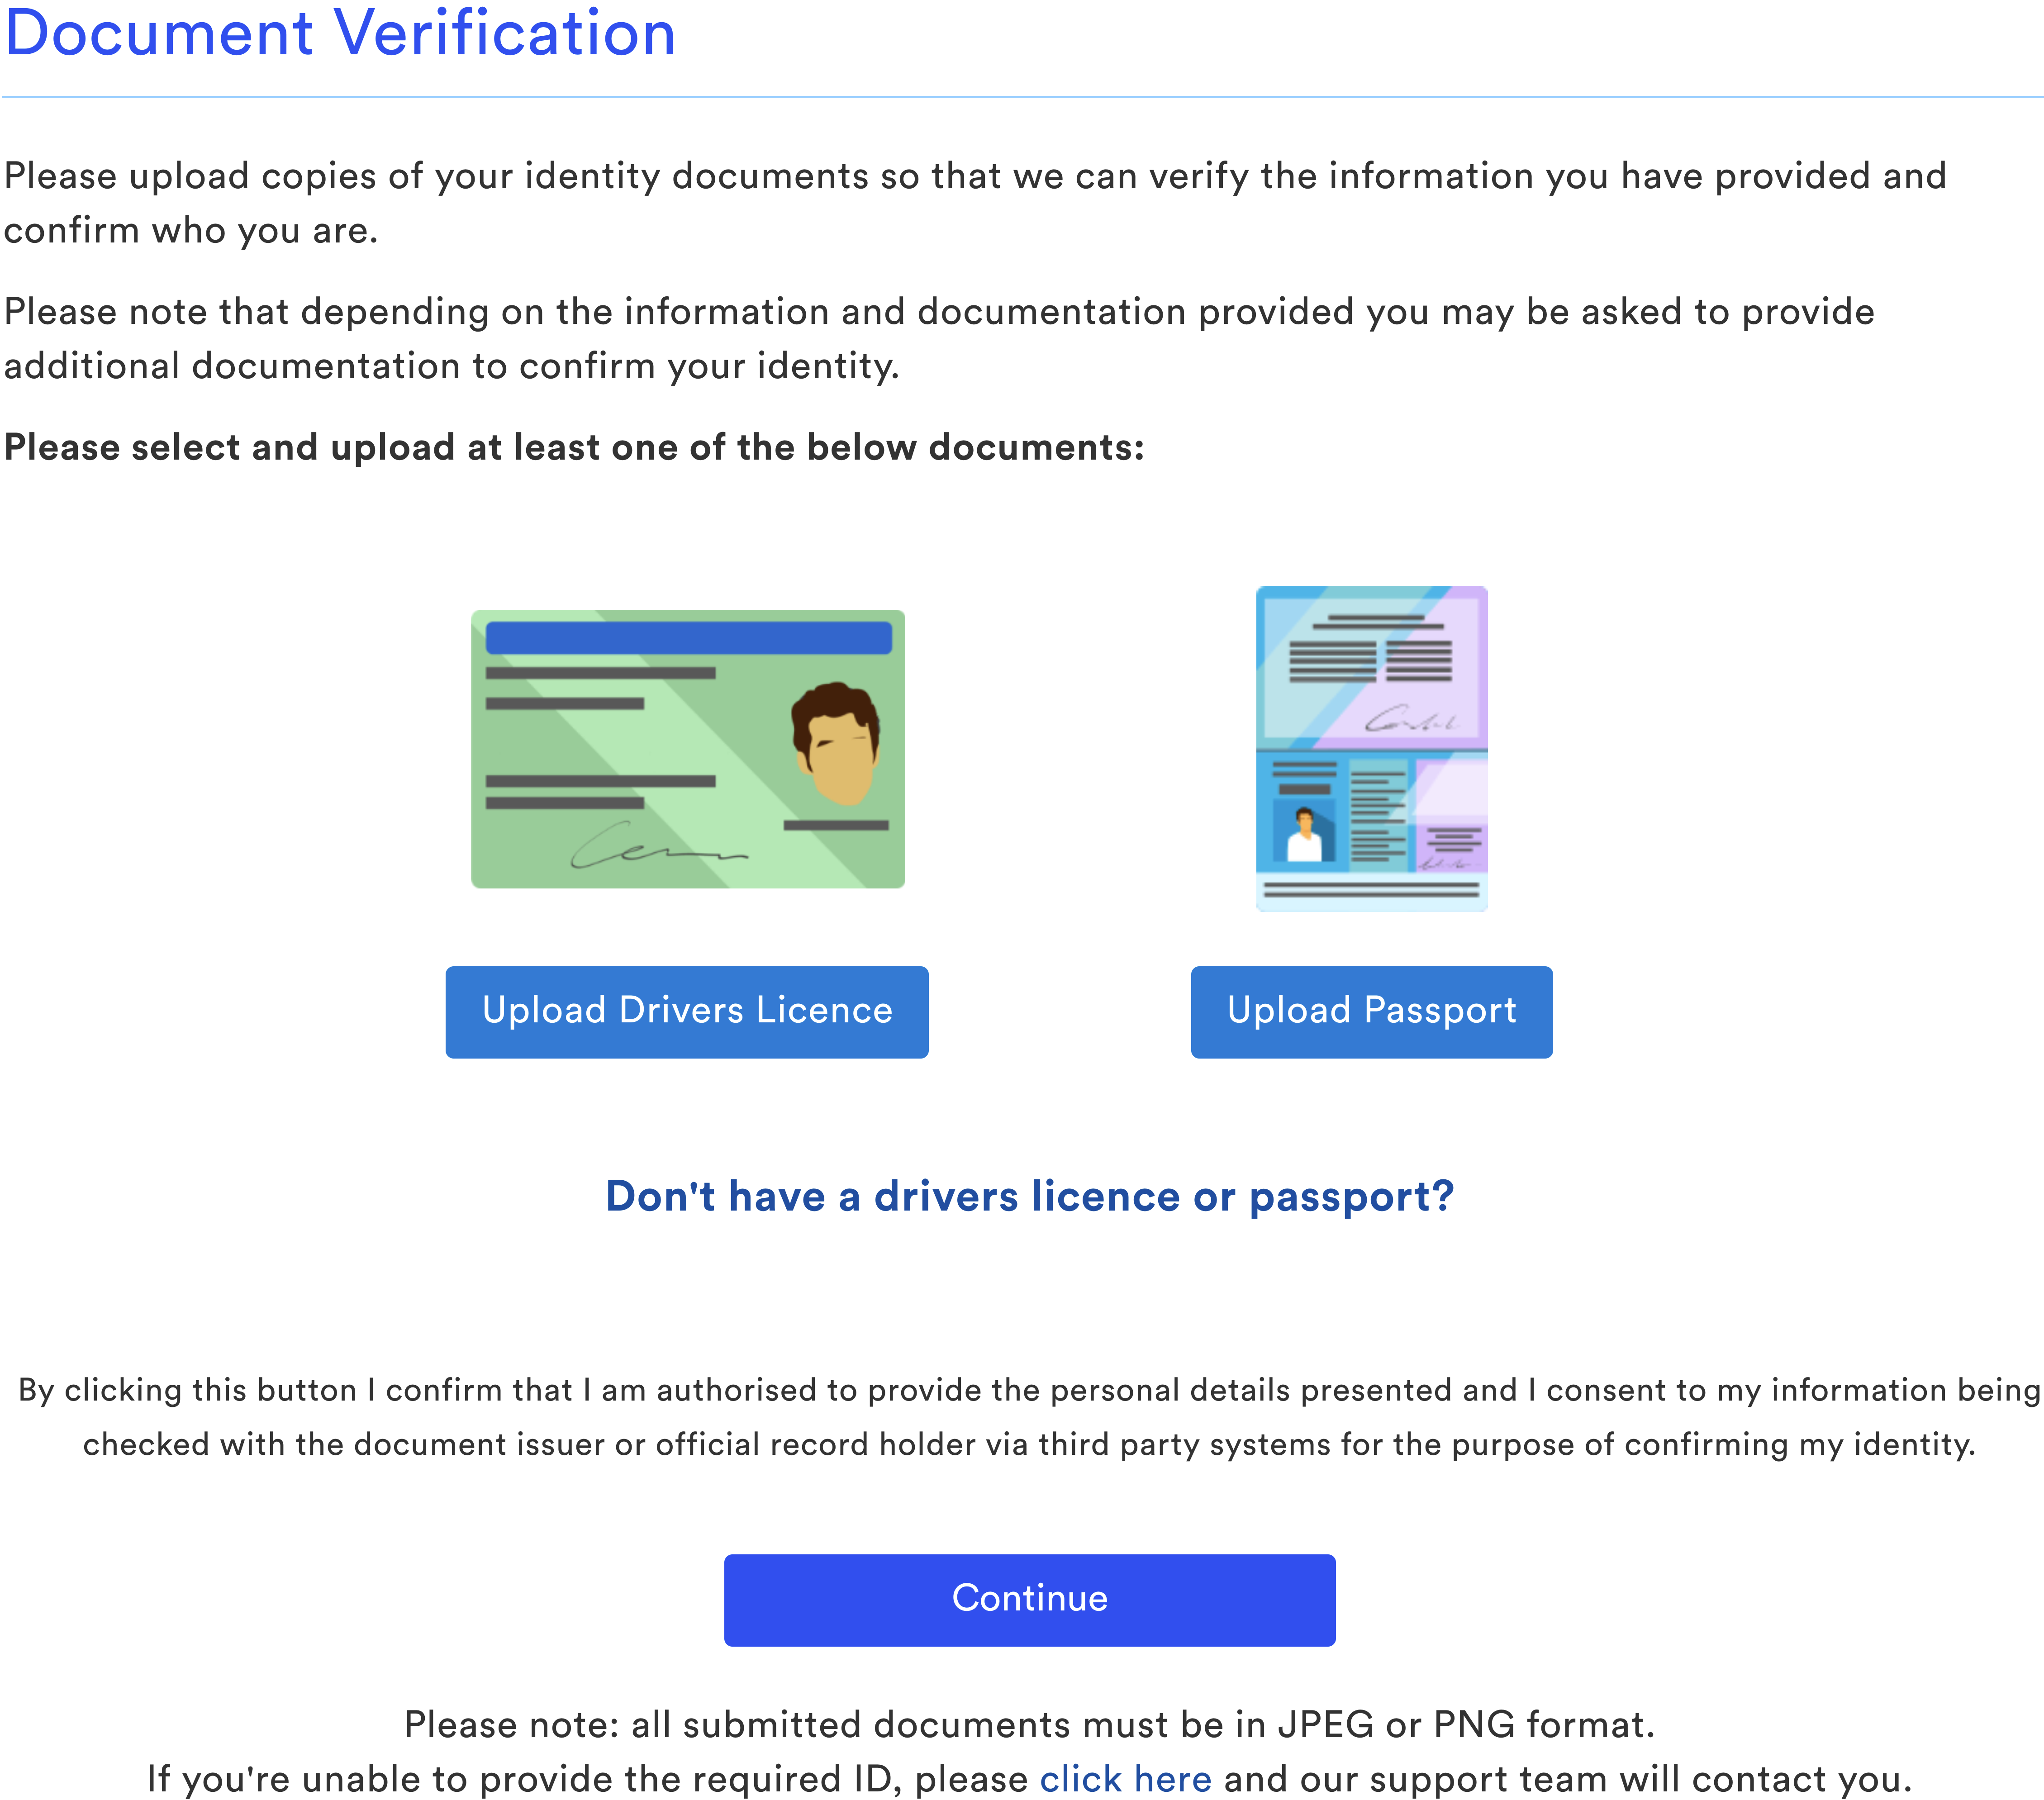 Document_Verification_v2.png